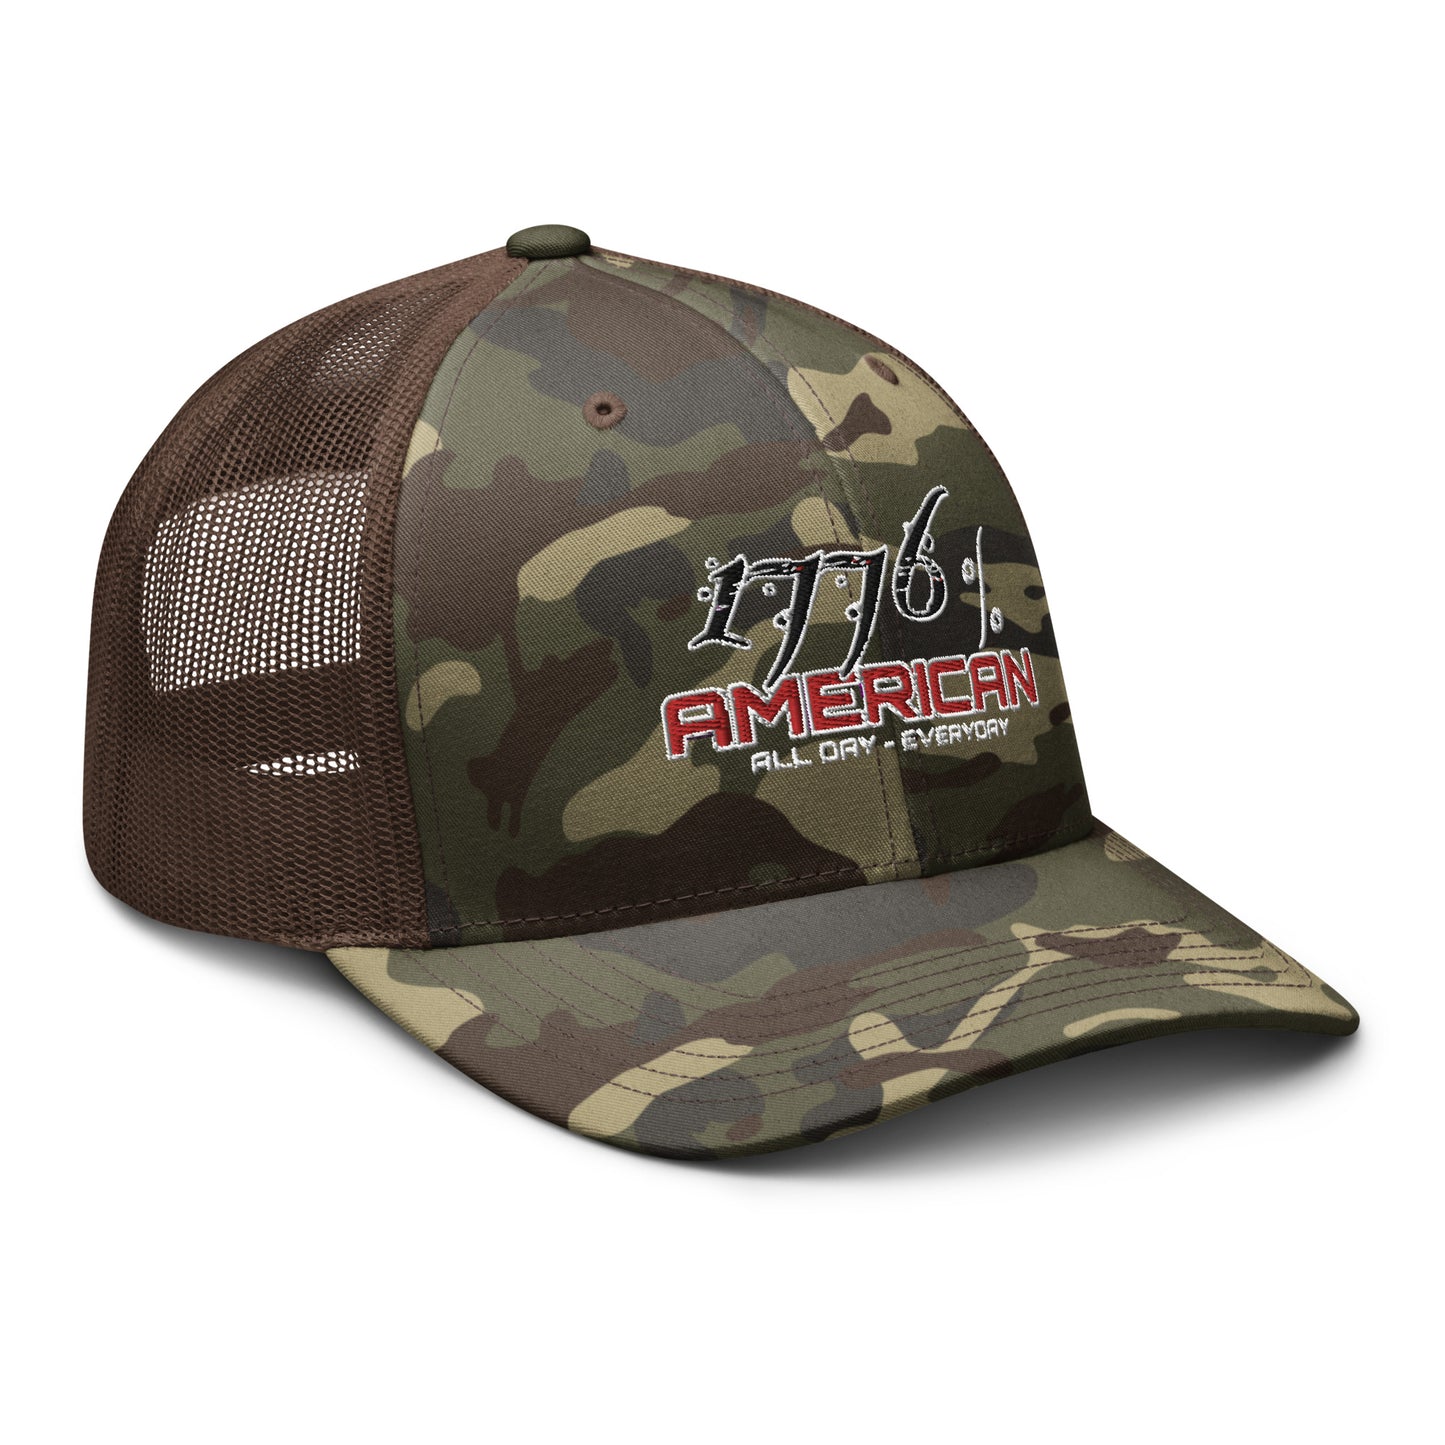 1776% American Camouflage trucker hat